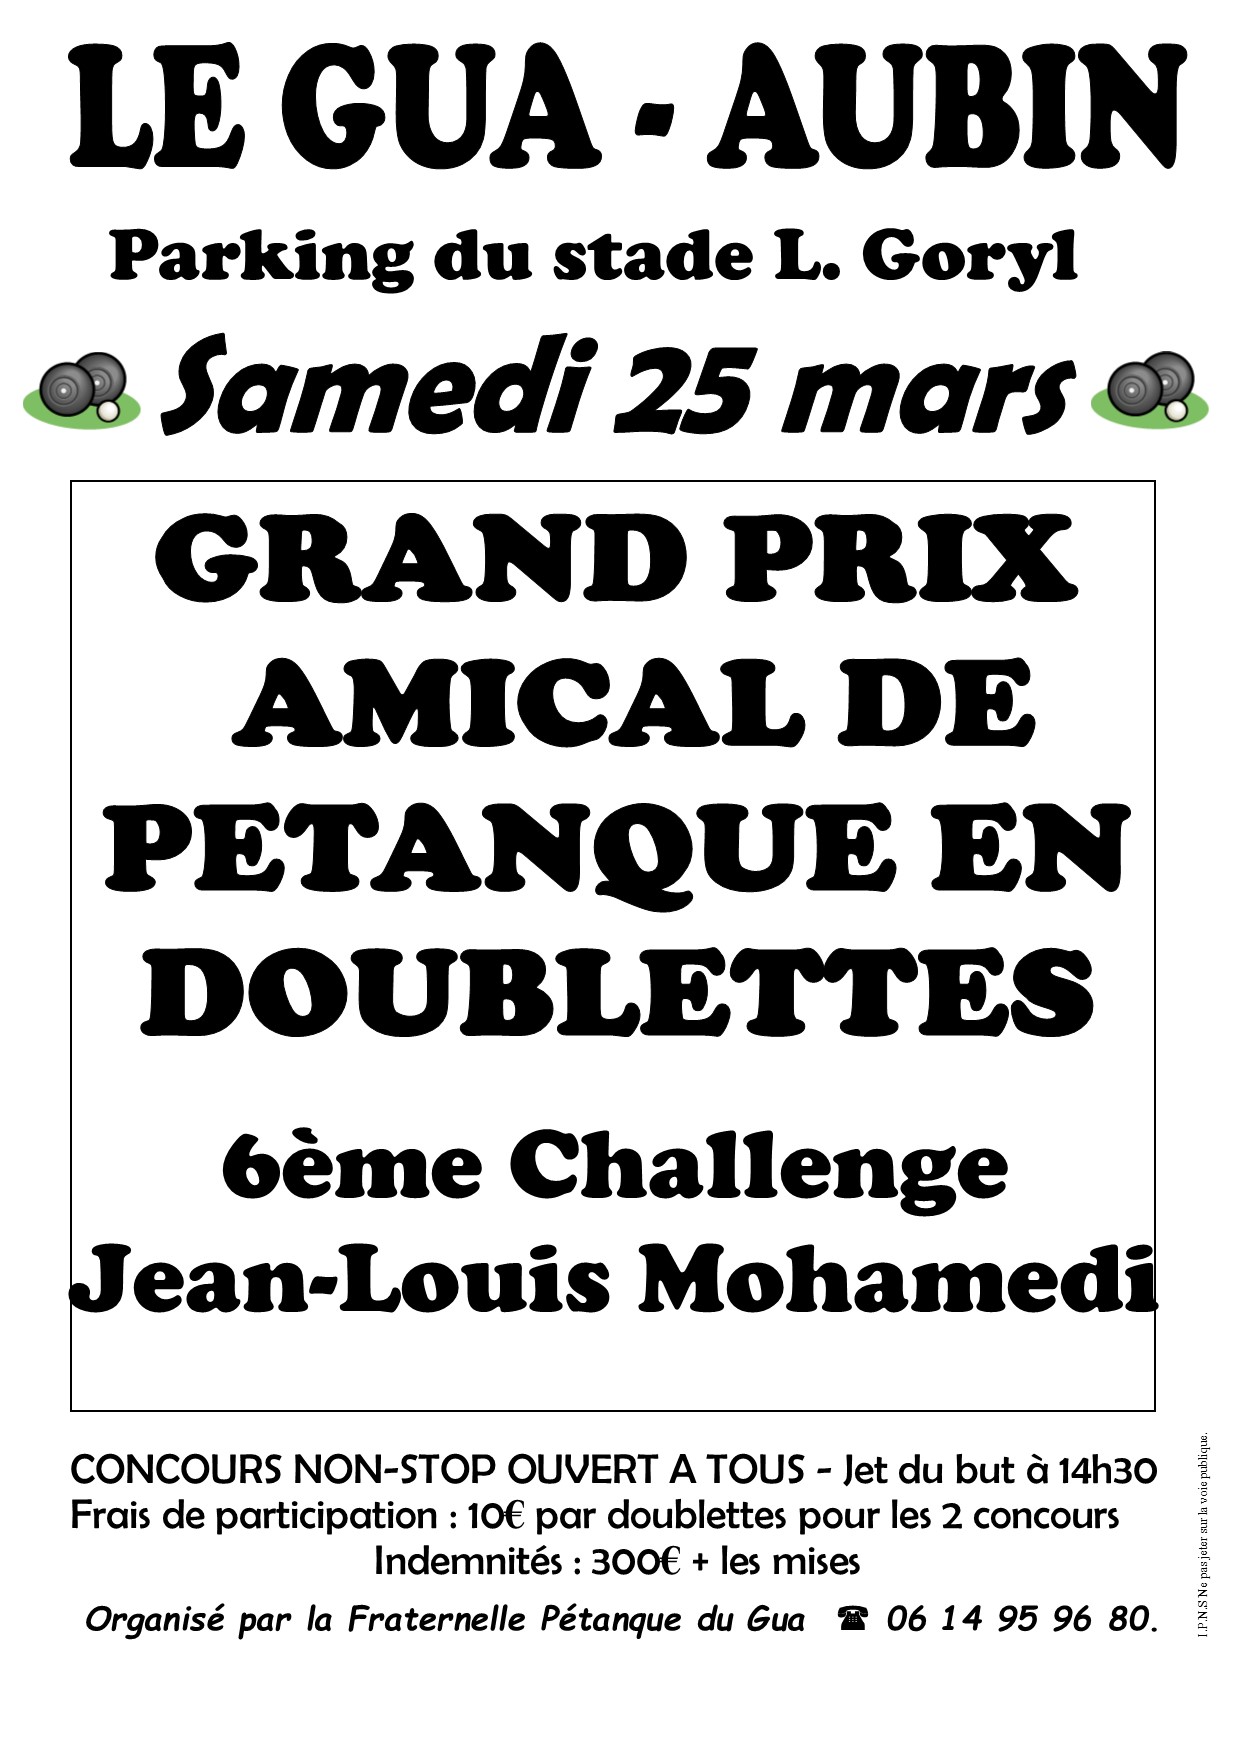 Challenge Jean-Louis Mohamedi